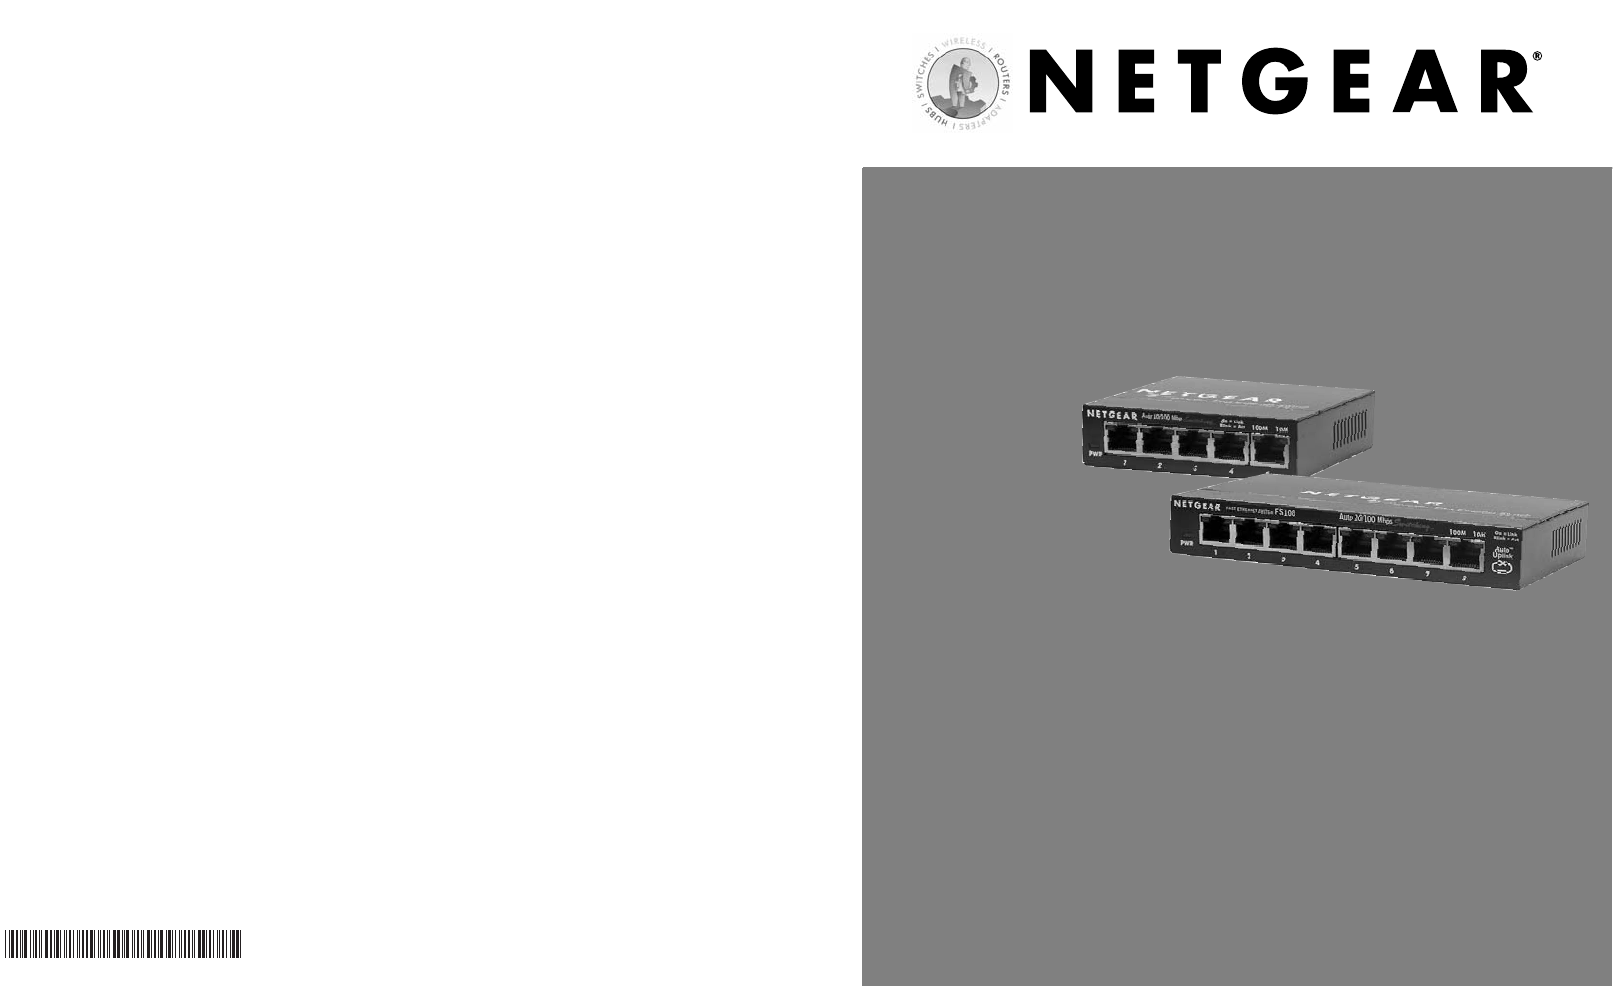 Netgear fs108 configuration